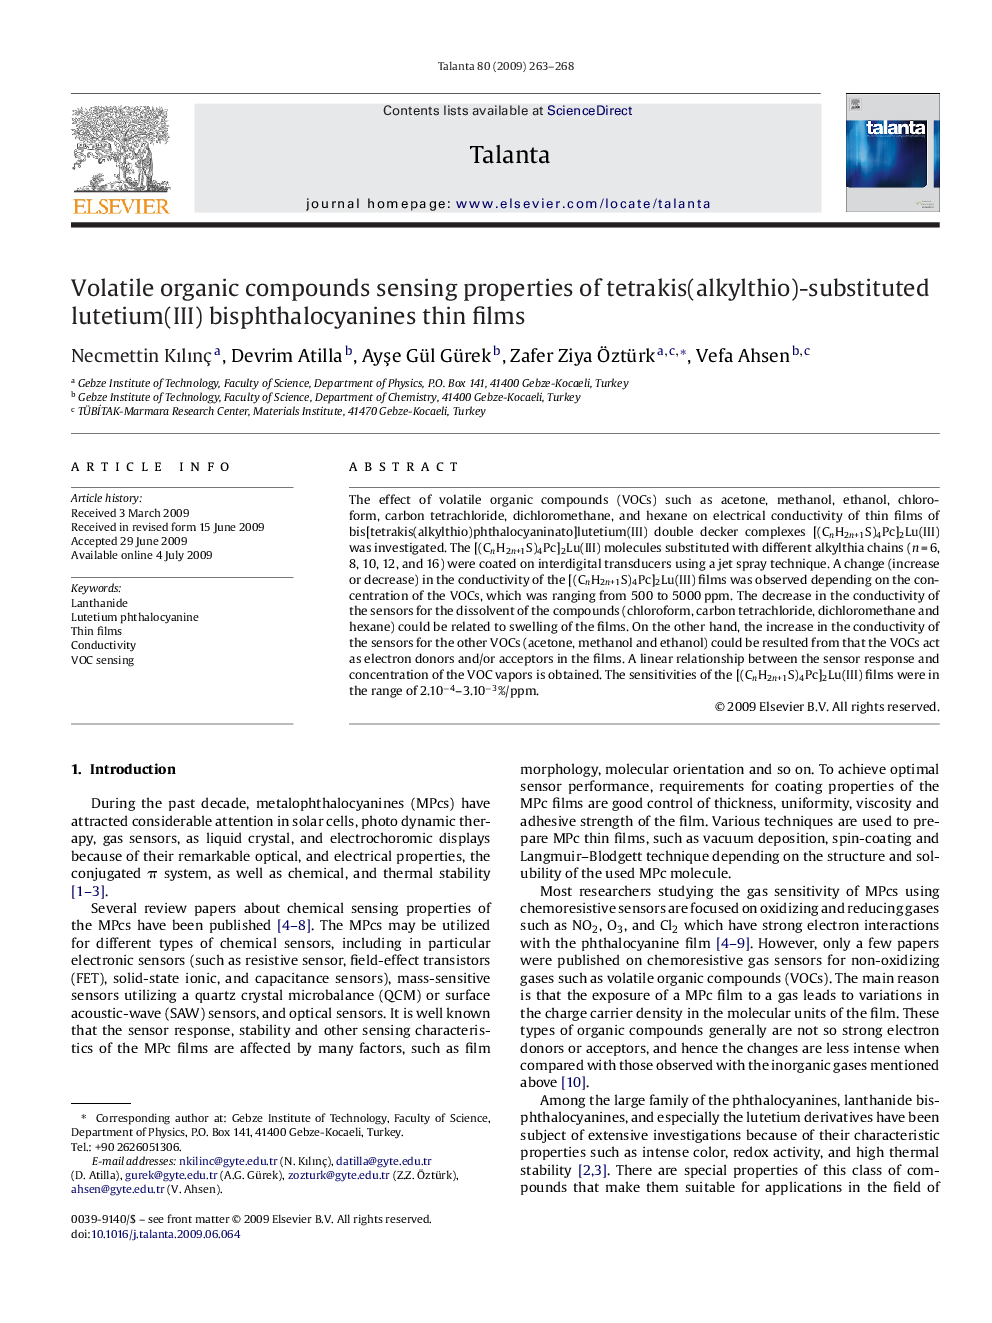 Volatile organic compounds sensing properties of tetrakis(alkylthio)-substituted lutetium(III) bisphthalocyanines thin films